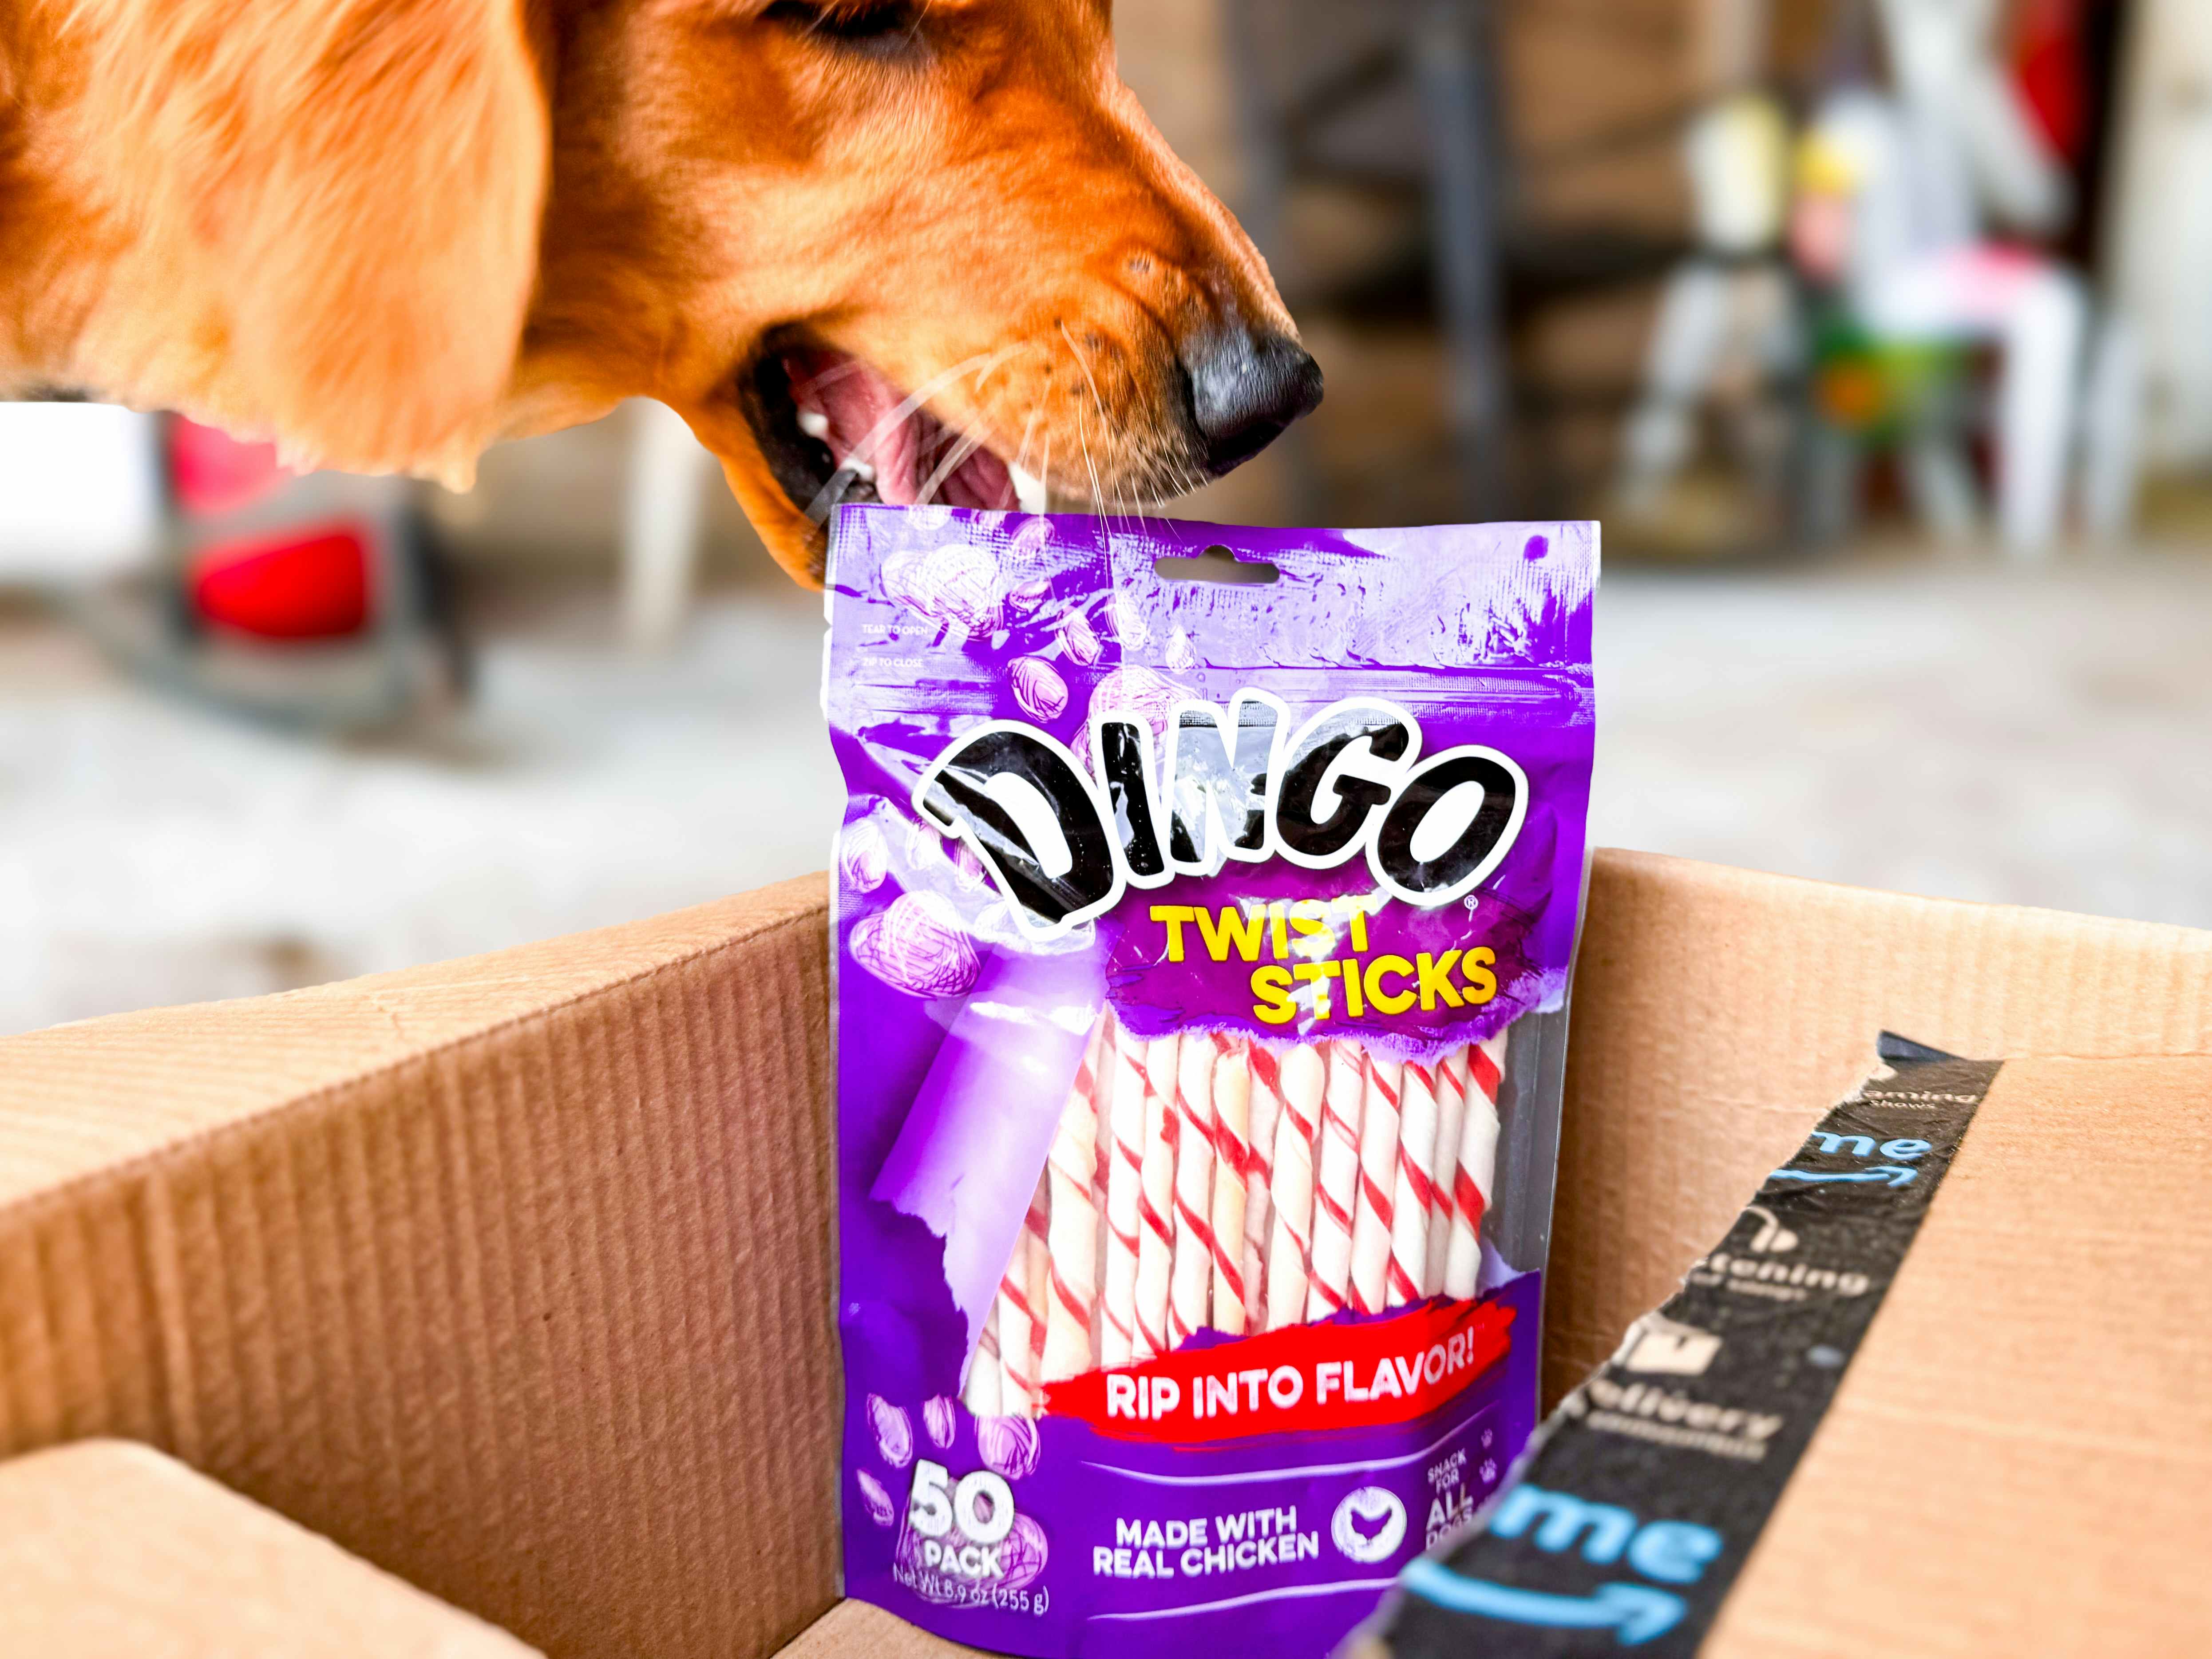 Dingo Twist Sticks, as Low as $4.52 on Amazon